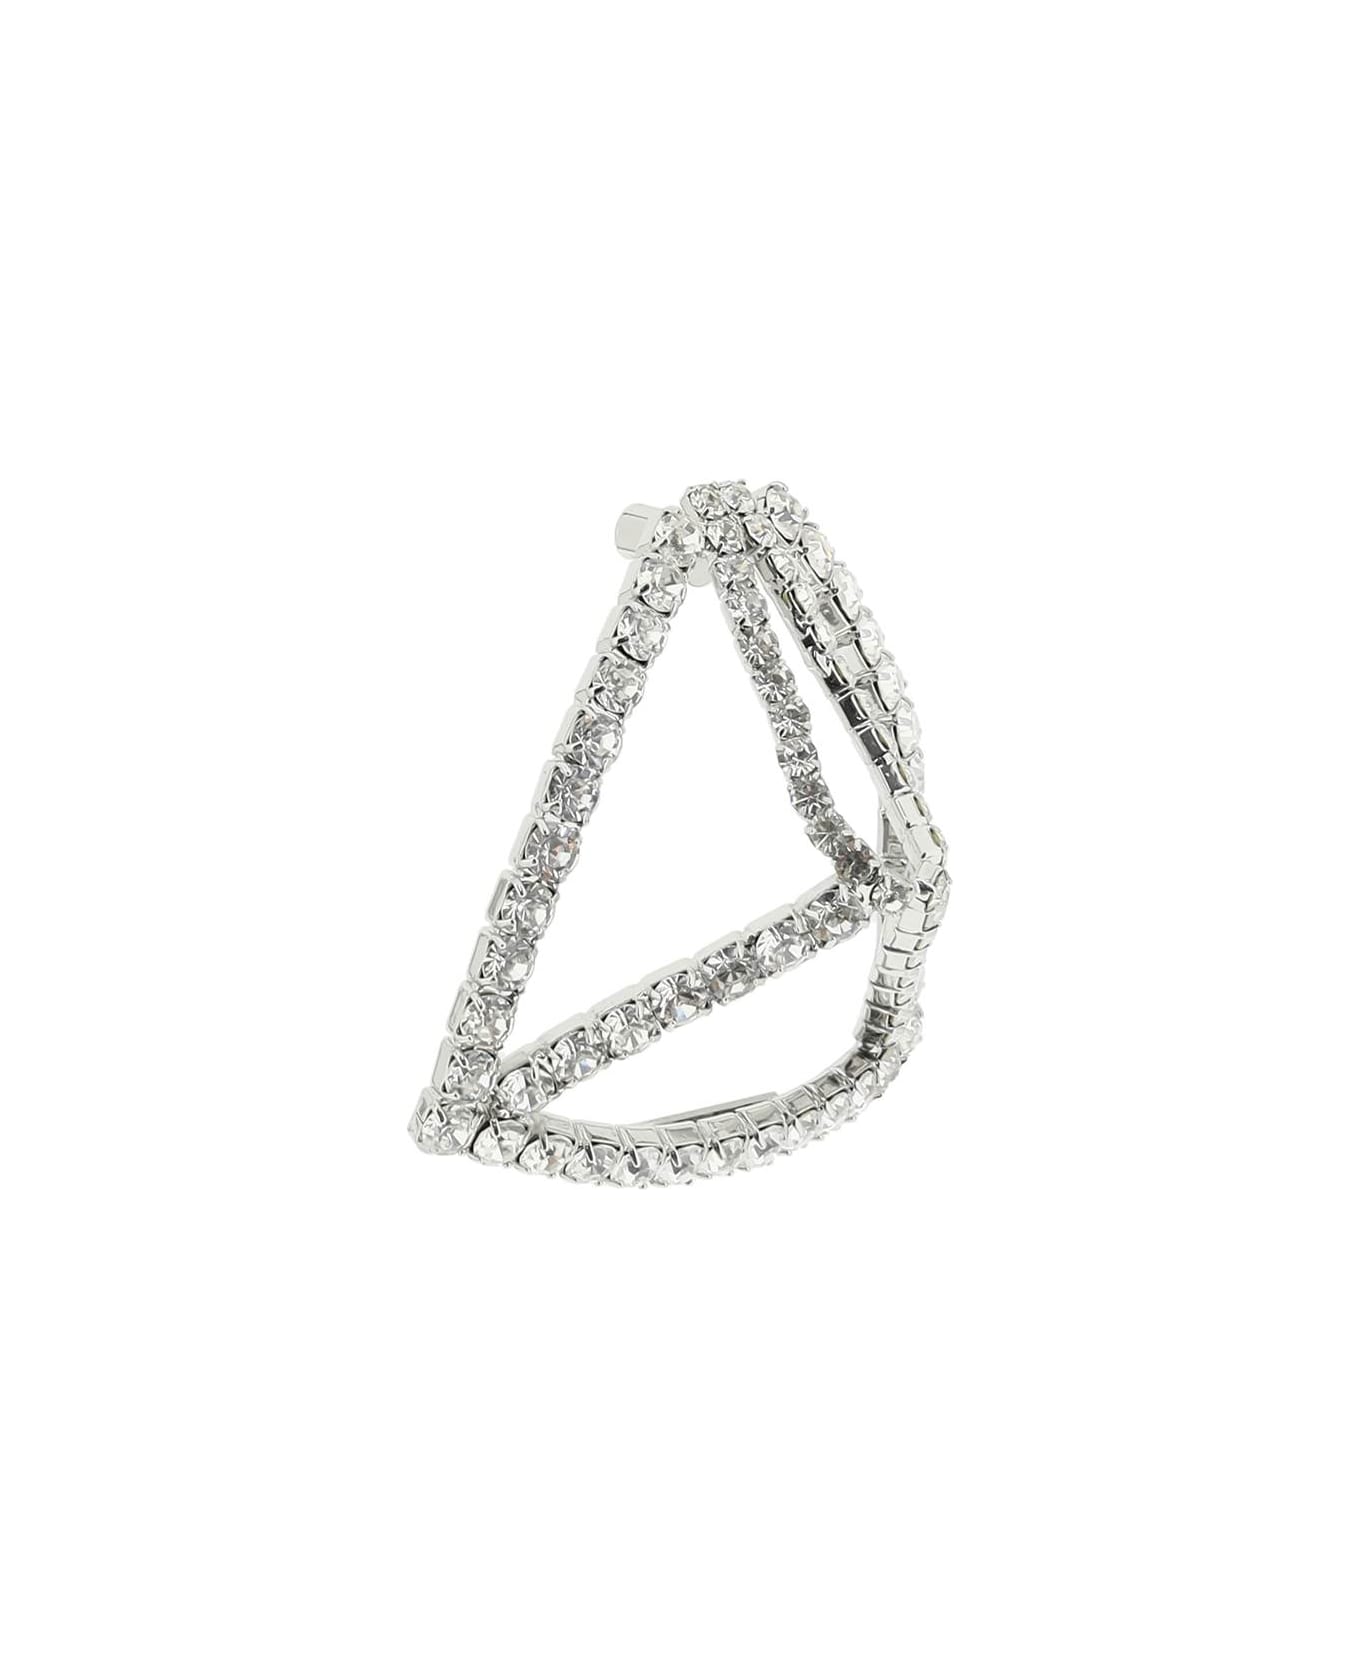 AREA 'crystal Pyramid' Earrings - CLEAR SILVER (Silver)